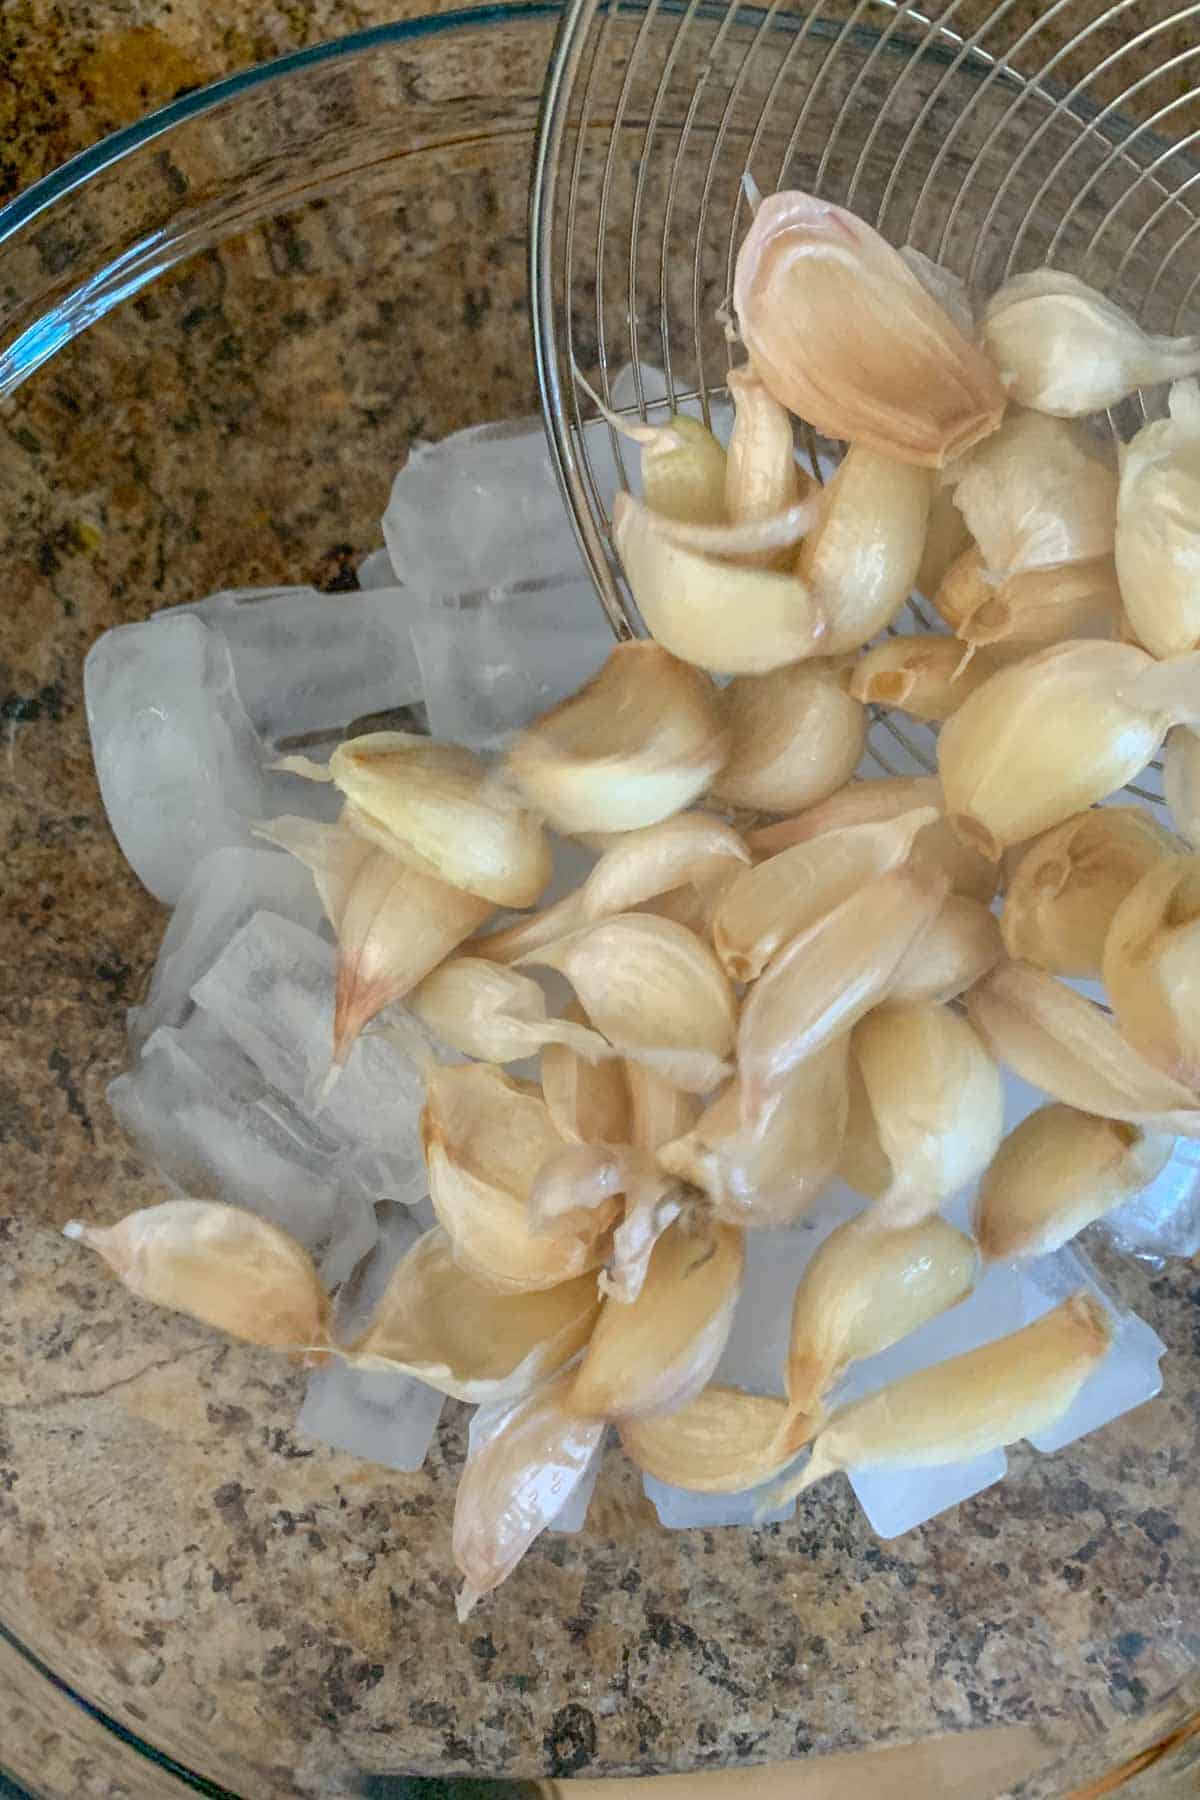 pouring boiled garlic into ice bath